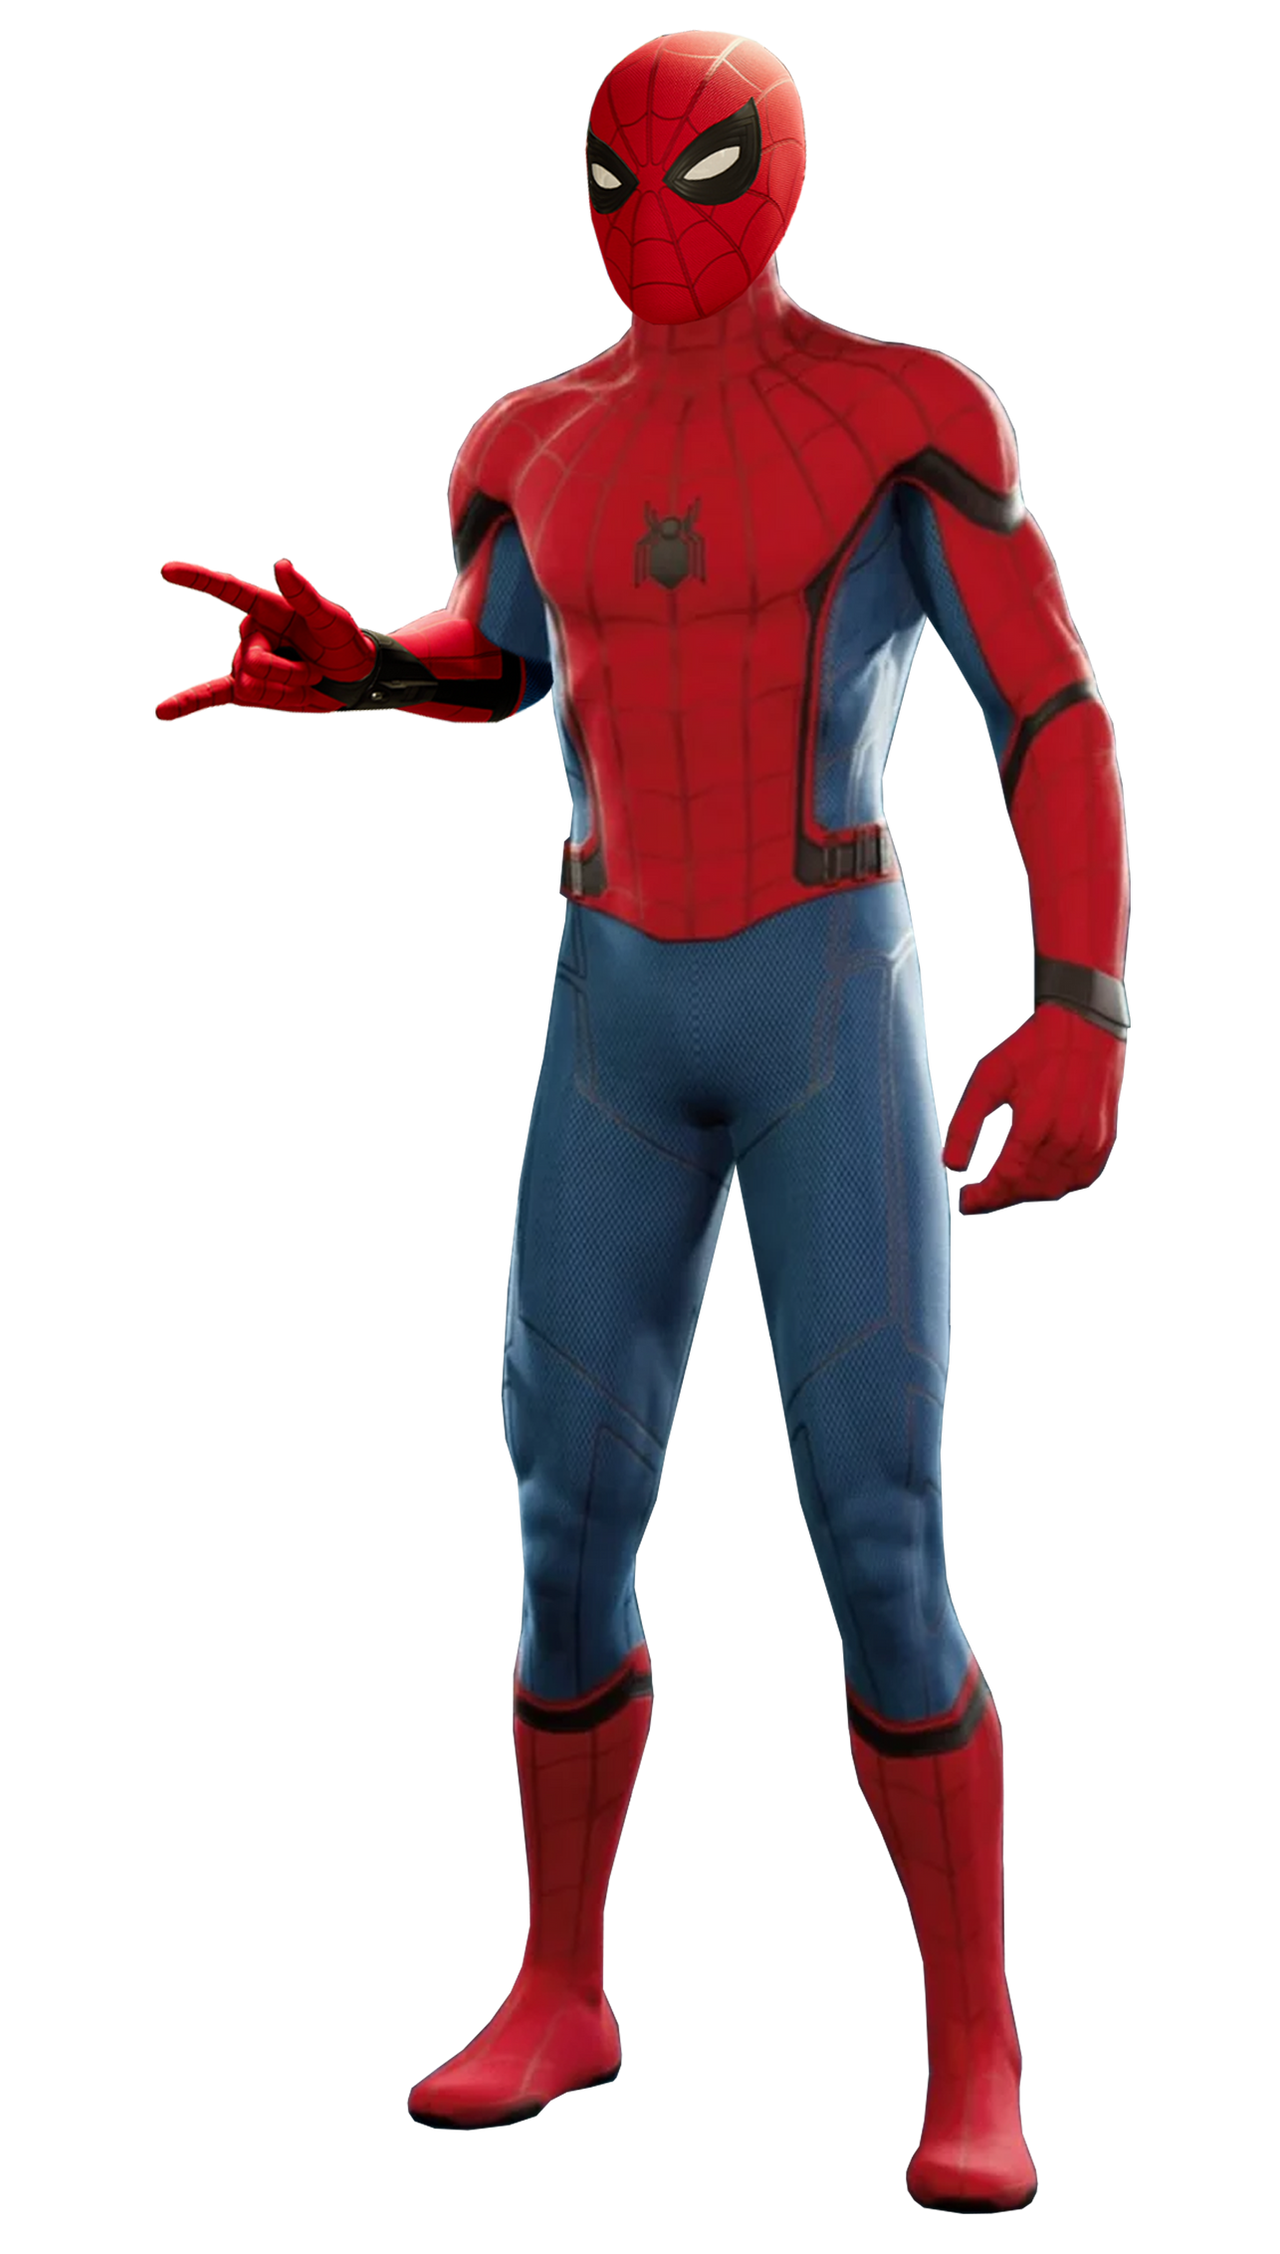 Ps4 Spider Man Mcu Suit Render By Kingevan210 On Deviantart